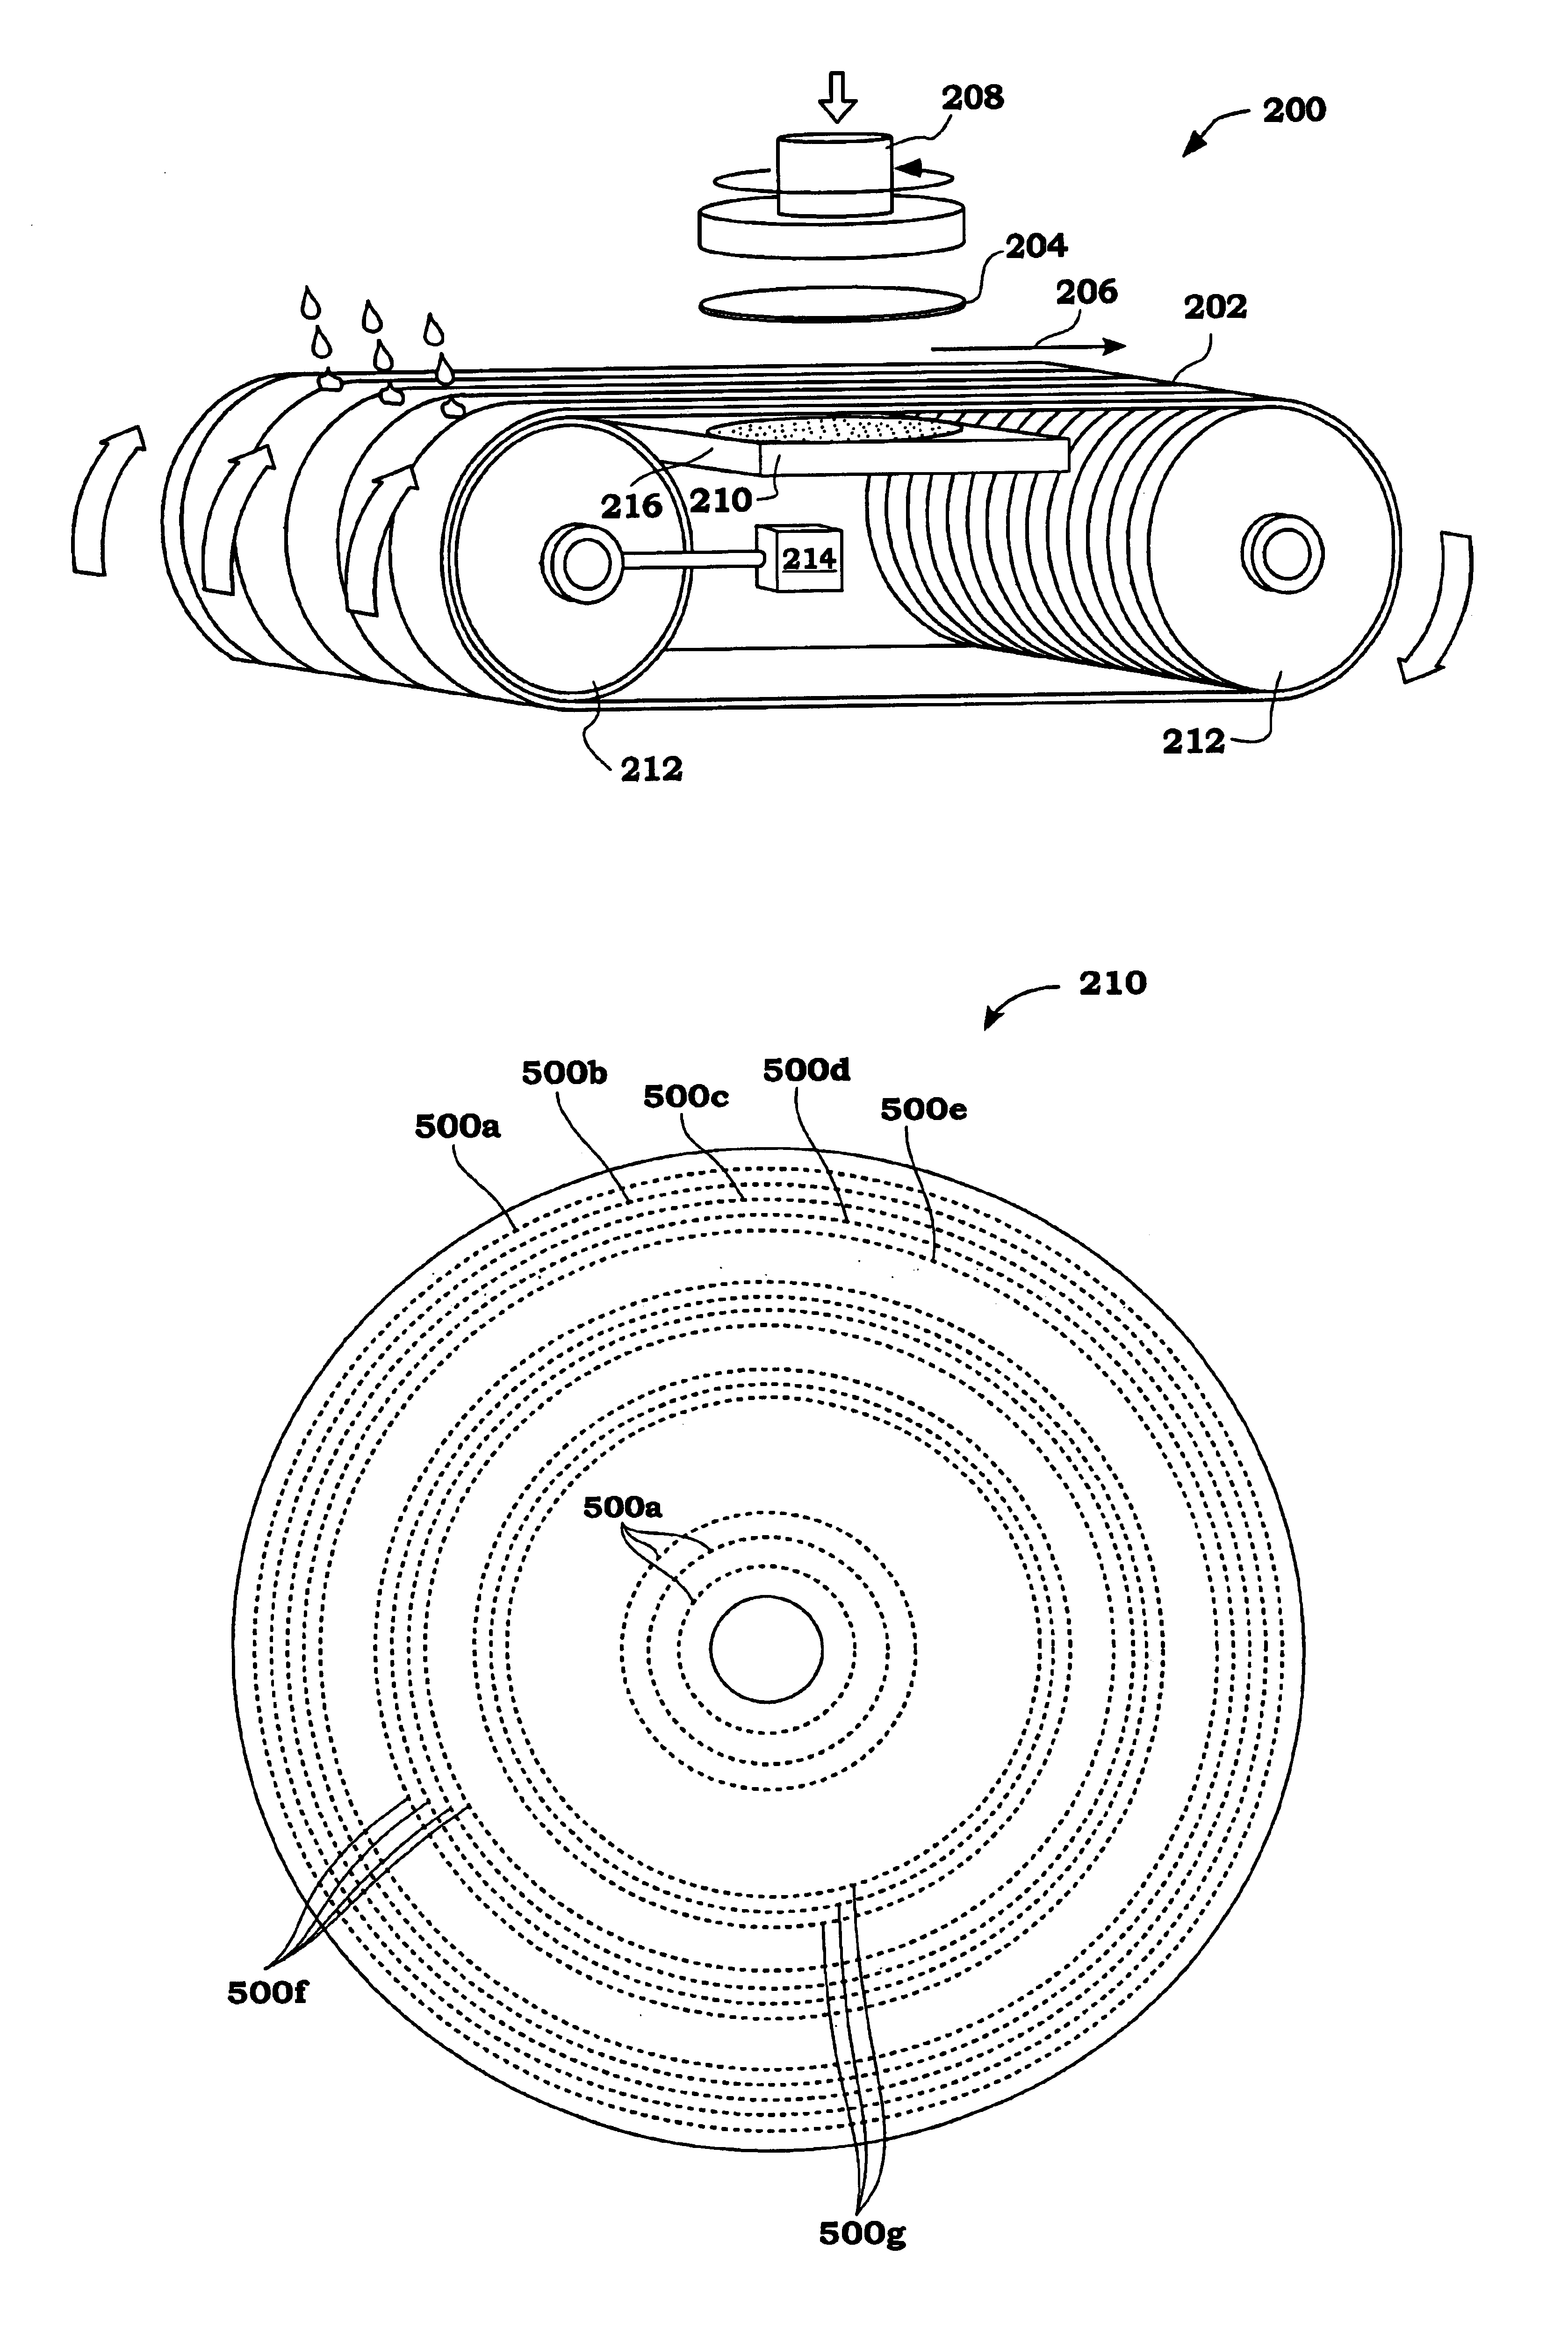 300 mm platen and belt configuration